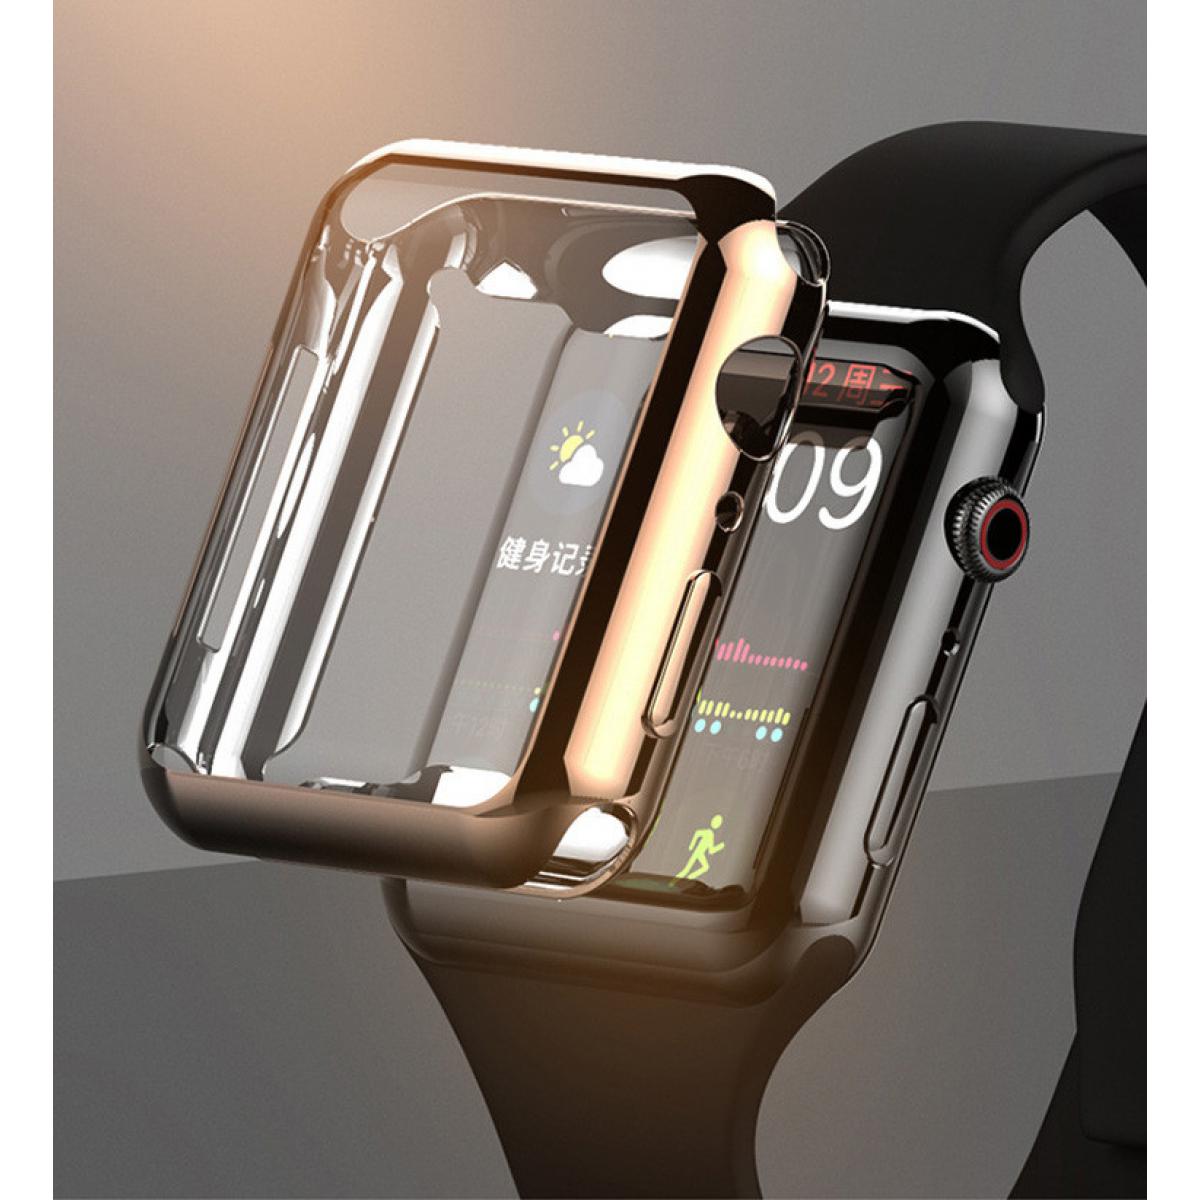 Shot - Coque Silicone 42mm pour IWATCH Serie 1 APPLE Bumper Protection Tactile (OR) - Accessoires montres connectées